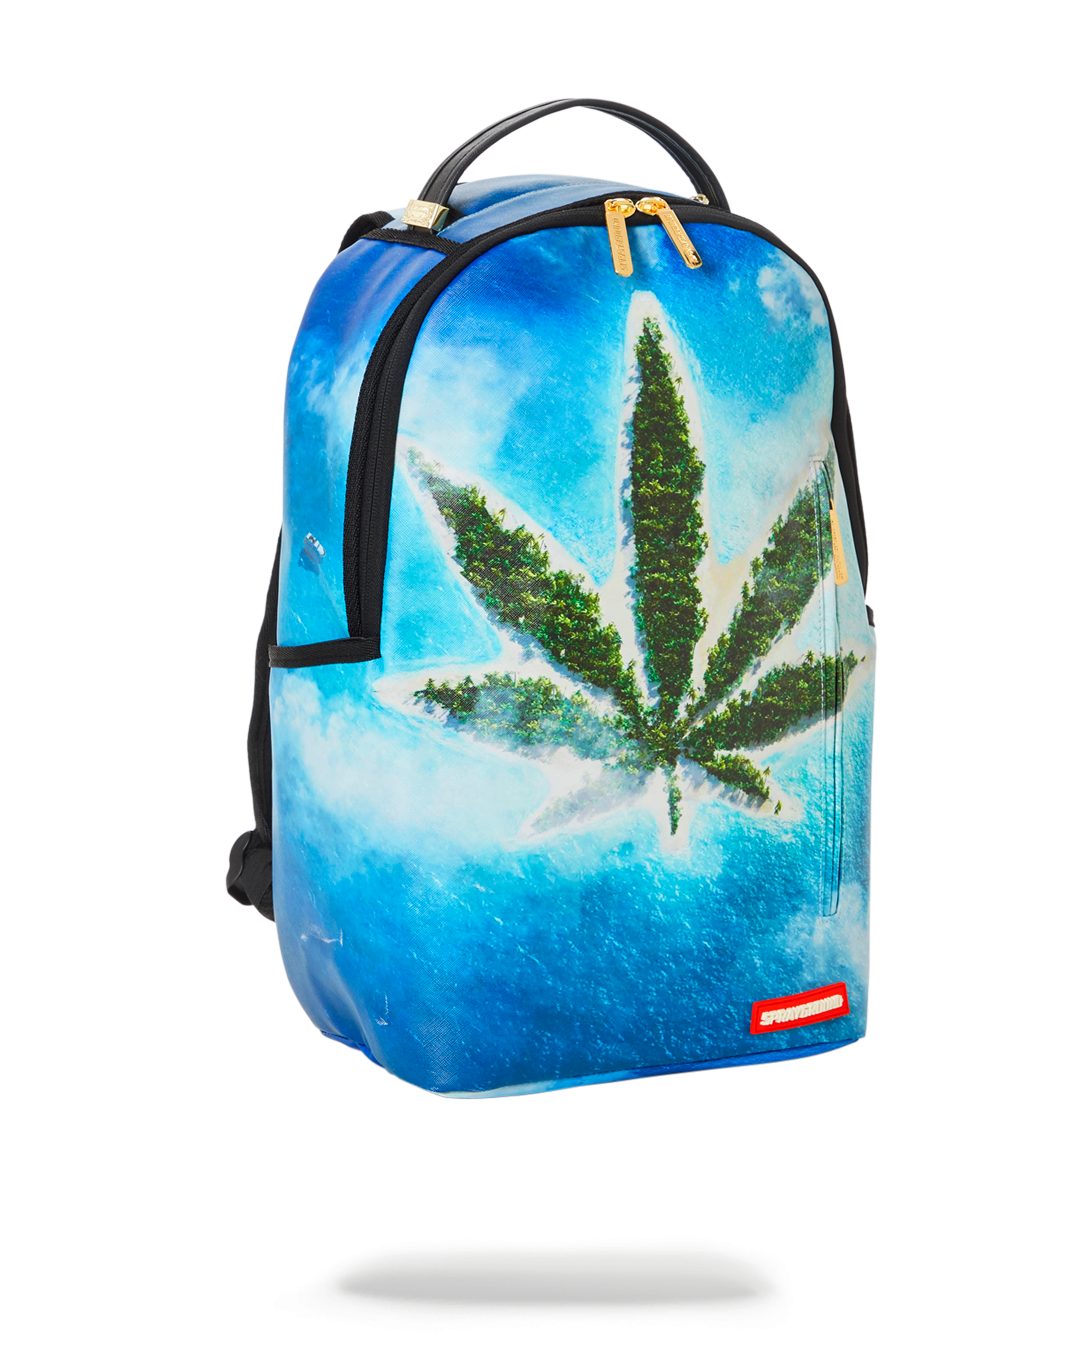 Sprayground - Money Island Backpack - Blue